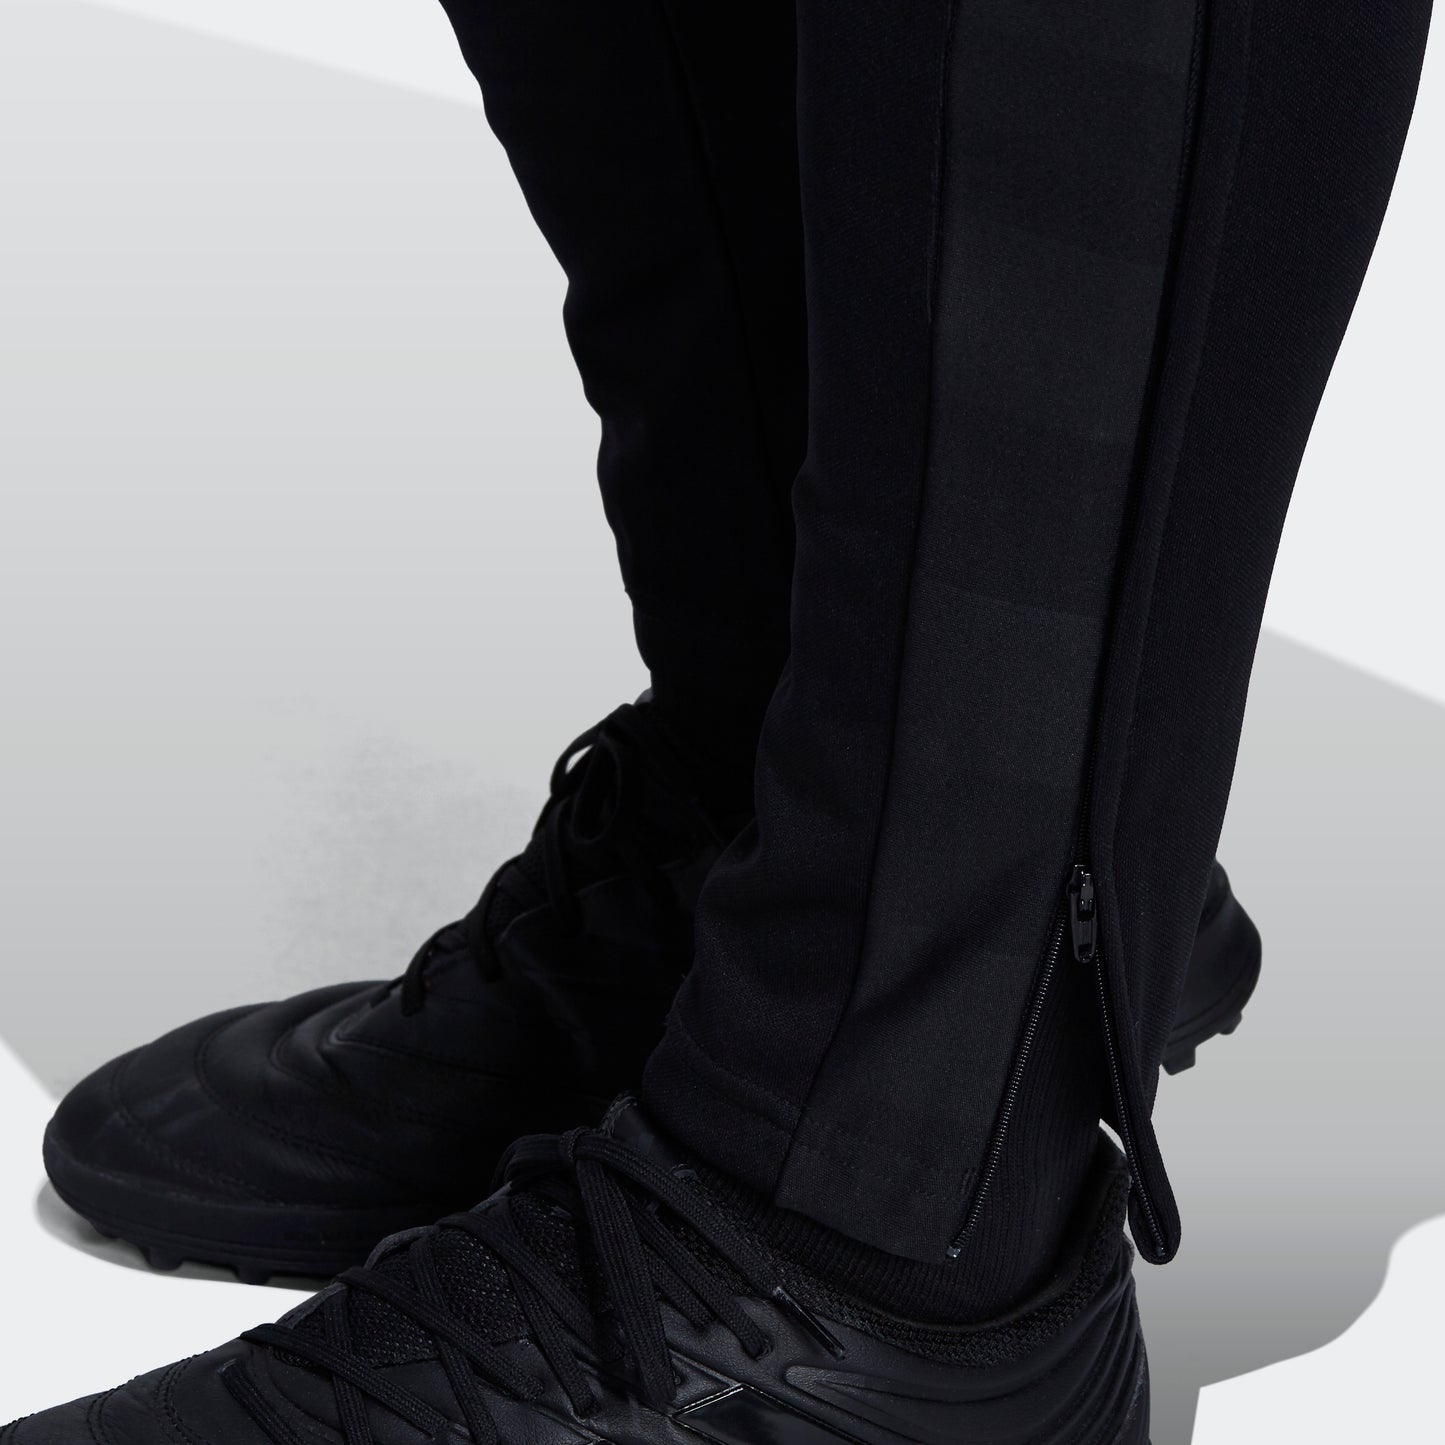 adidas TIRO 21 Reflective Track Pants | Black | Men's